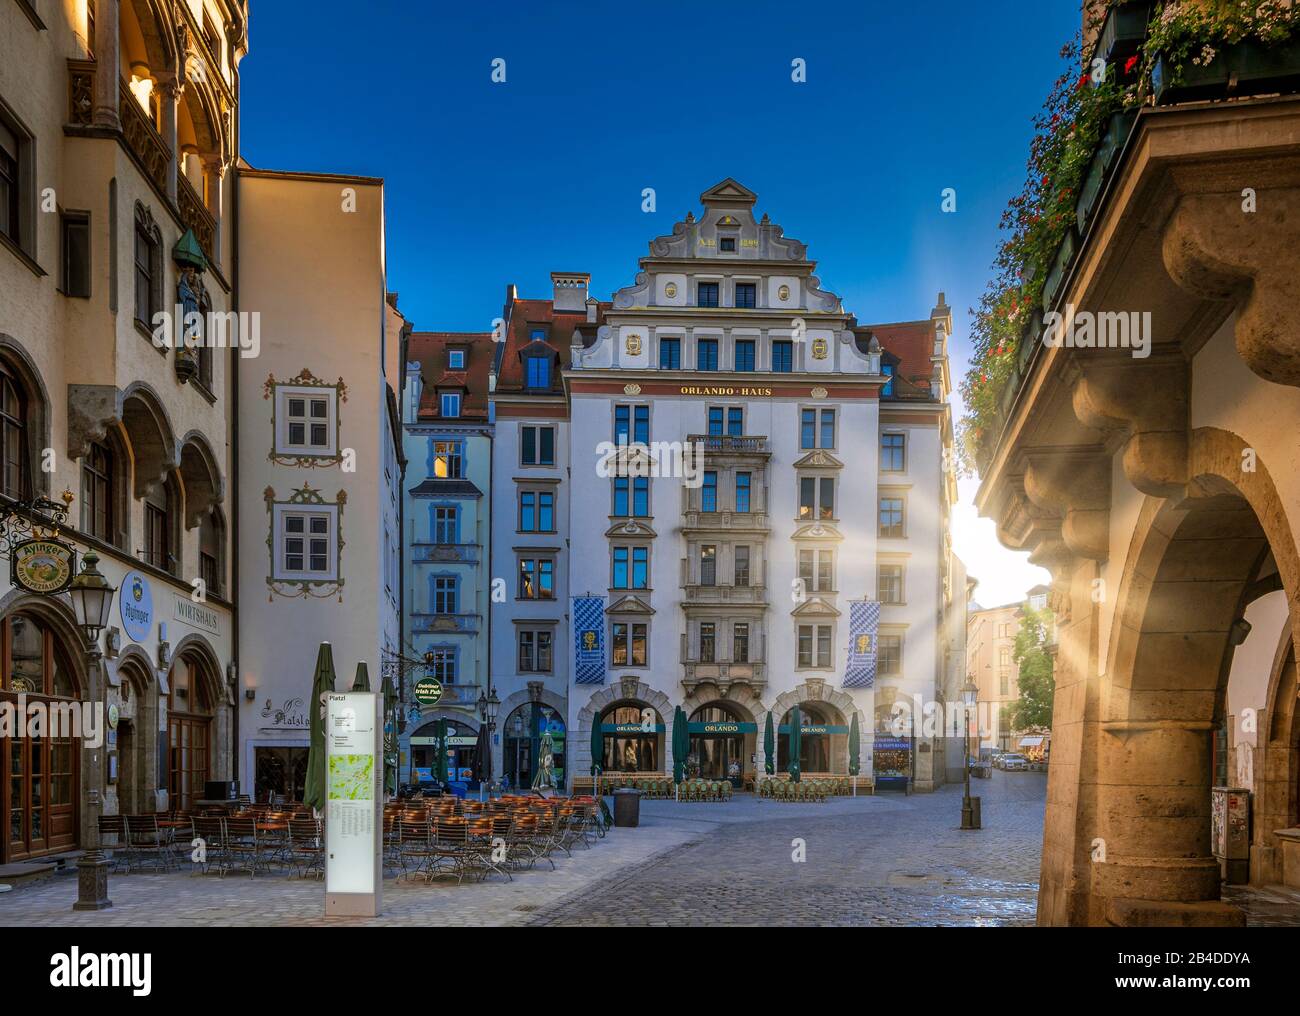 Orlando-Haus am Platzl, Munich, Upper Bavaria, Bavaria, Germany, Europe Stock Photo